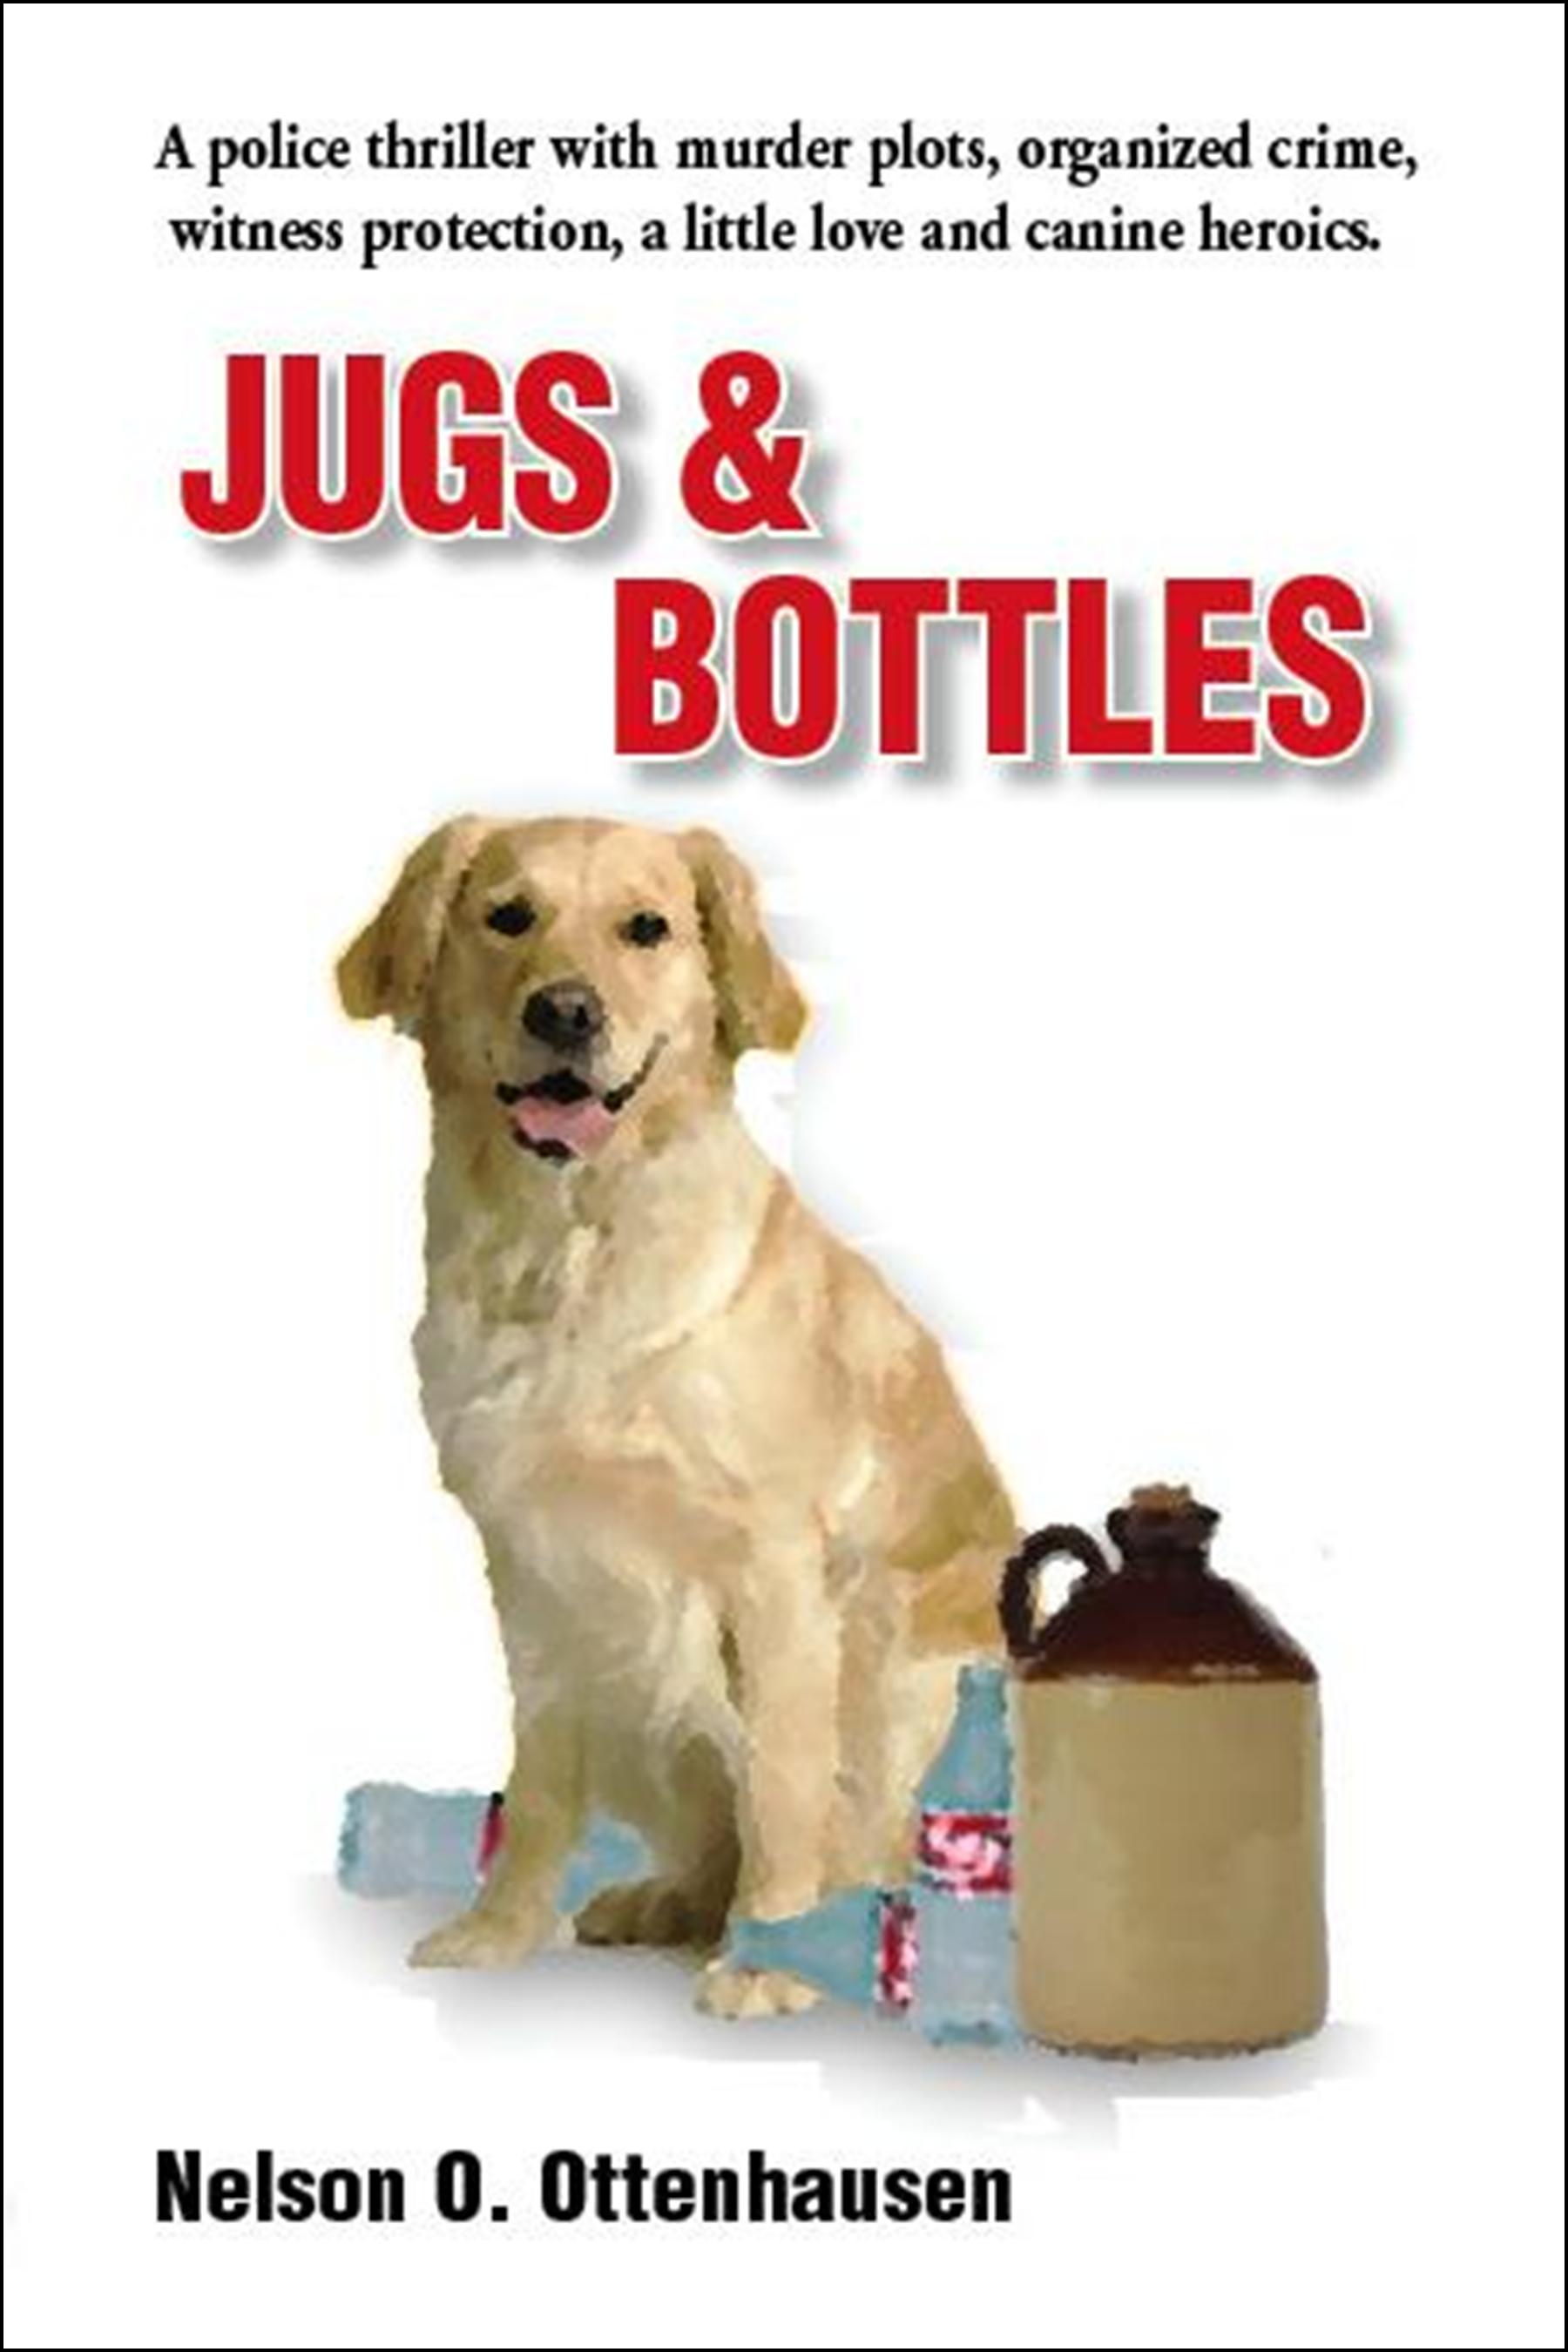 Jugs & Bottles by Nelson O. Ottenhausen